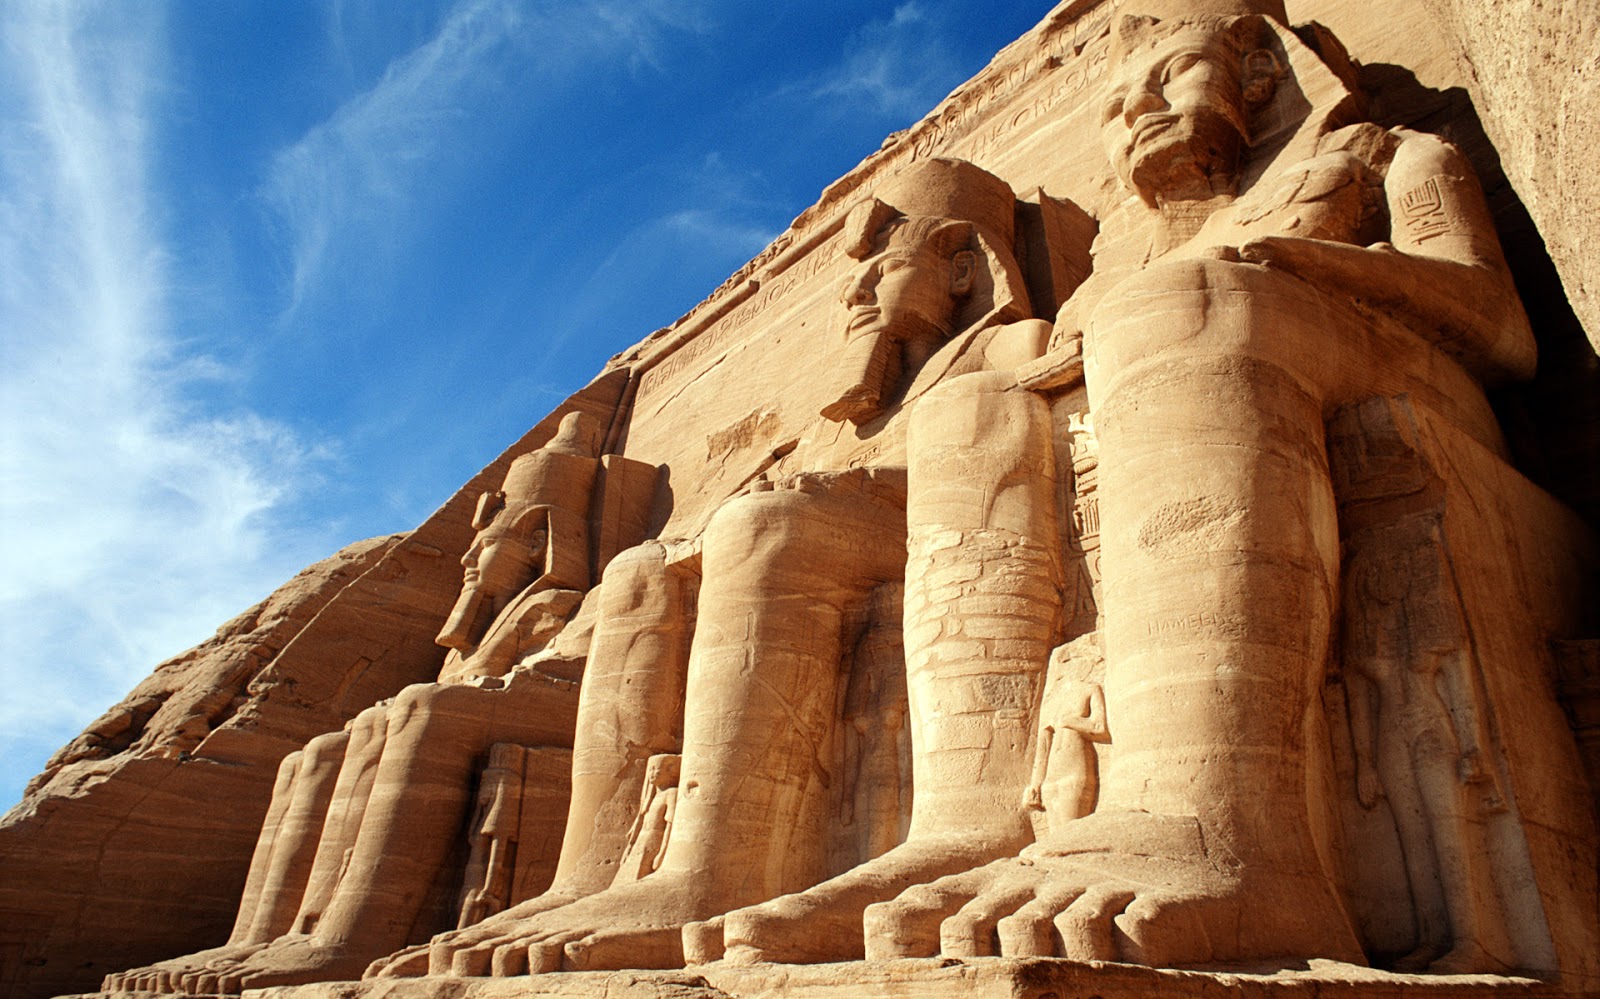 alte ägypten tapete,alte geschichte,ägyptischer tempel,totentempel,archäologische fundstätte,geschichte